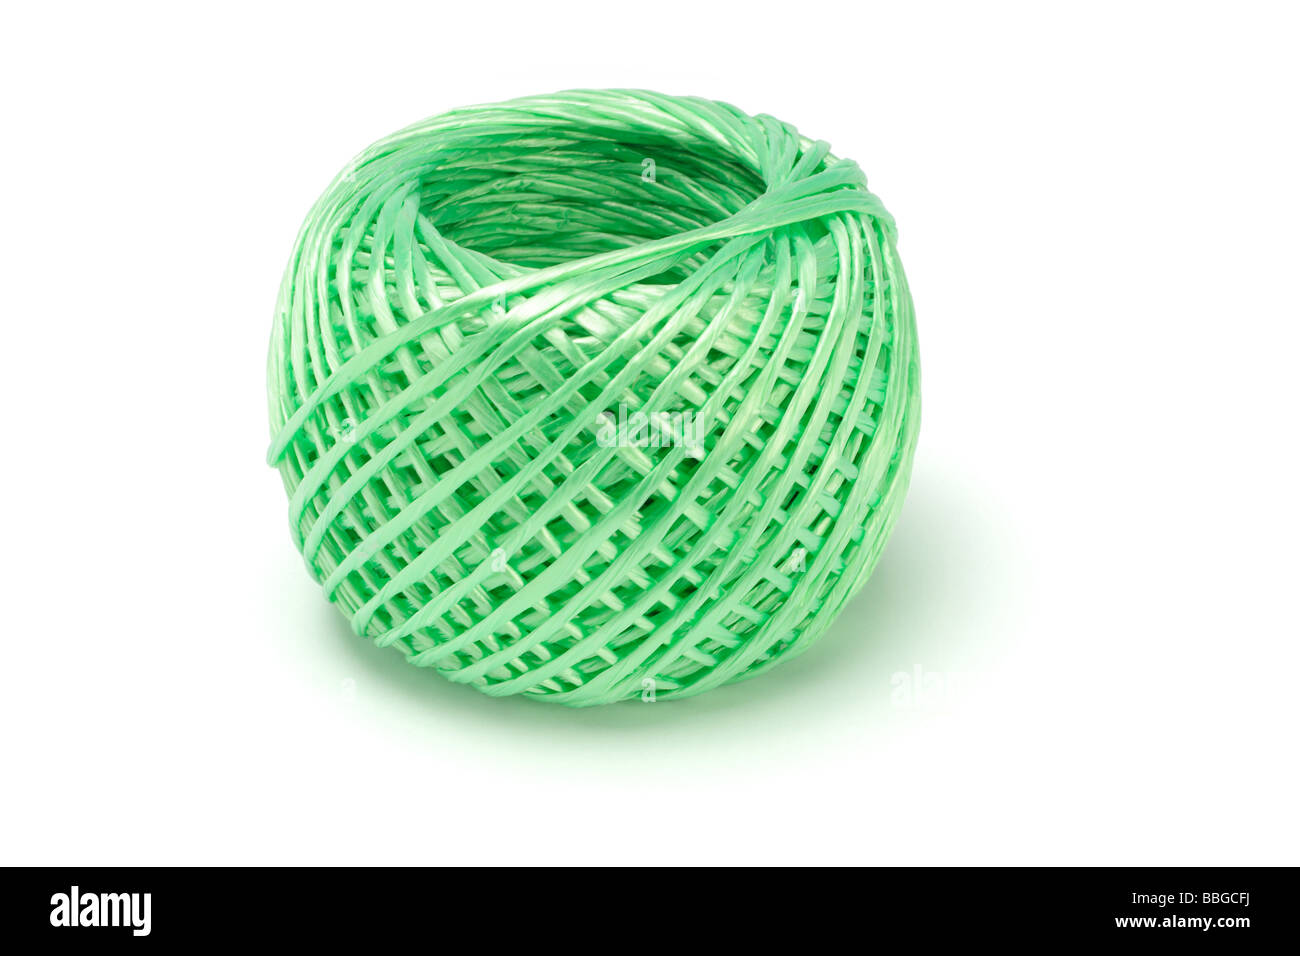 Ball of nylon string on white background Stock Photo